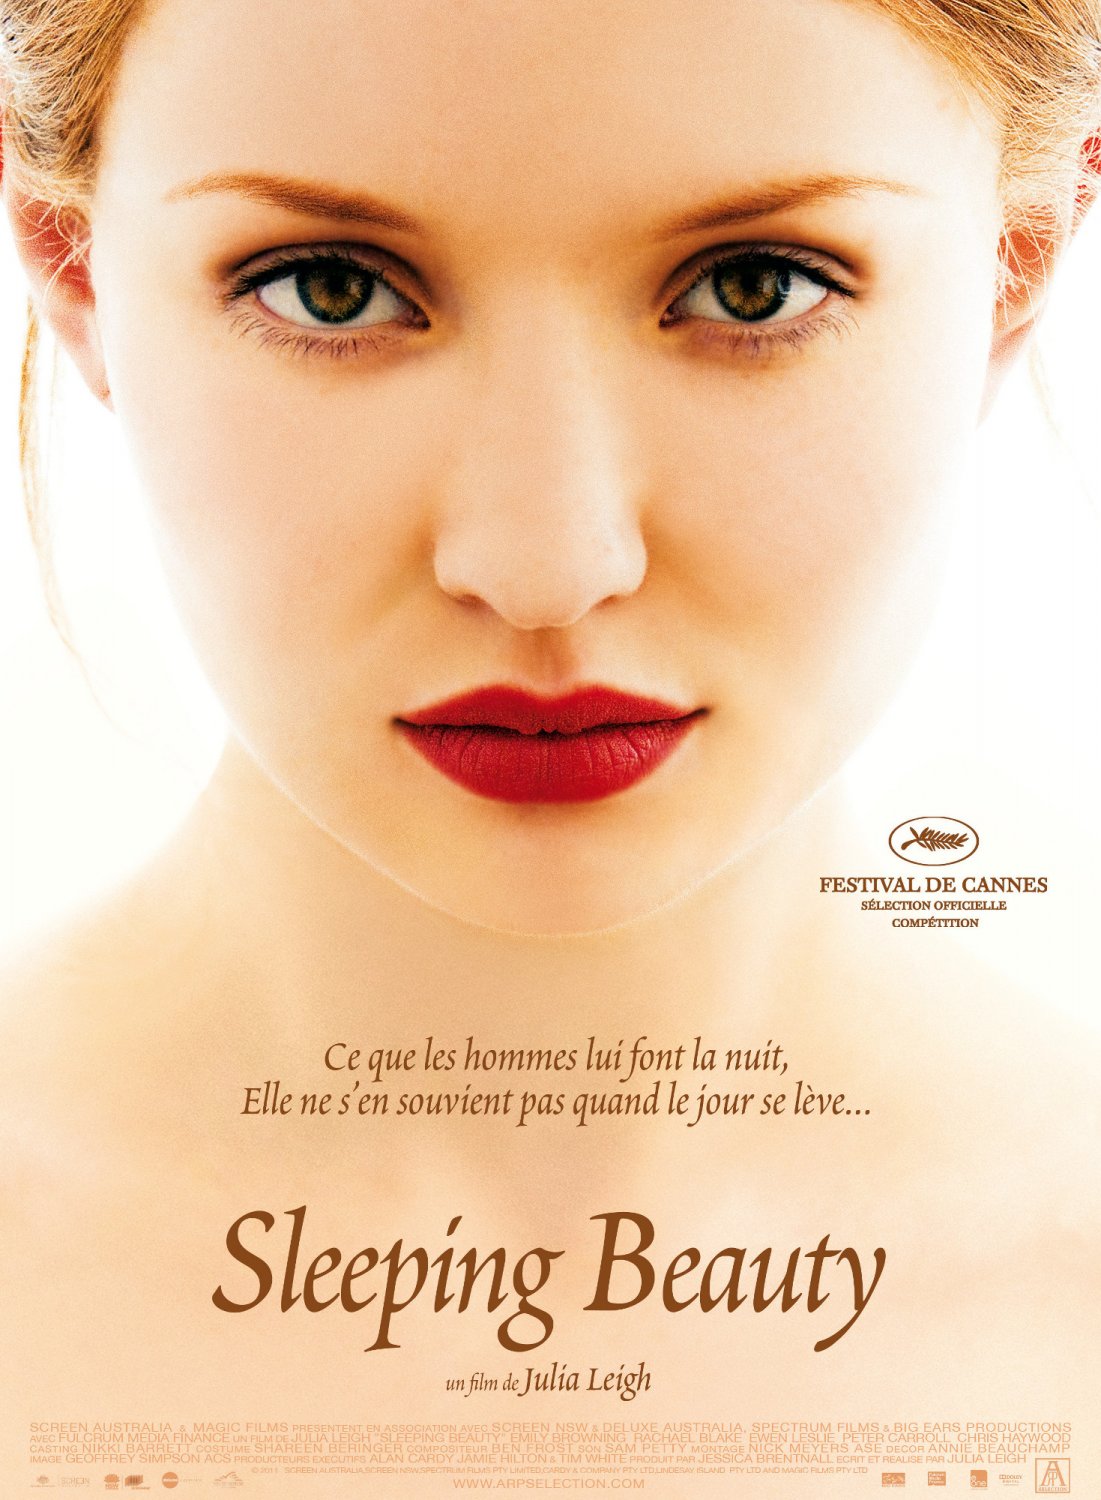 http://4.bp.blogspot.com/-IhPZ2ueOh8A/Ti-ntAw2BhI/AAAAAAAAHjE/UjNVgauLnjg/s1600/sleeping_beauty_movie_poster_2.jpg